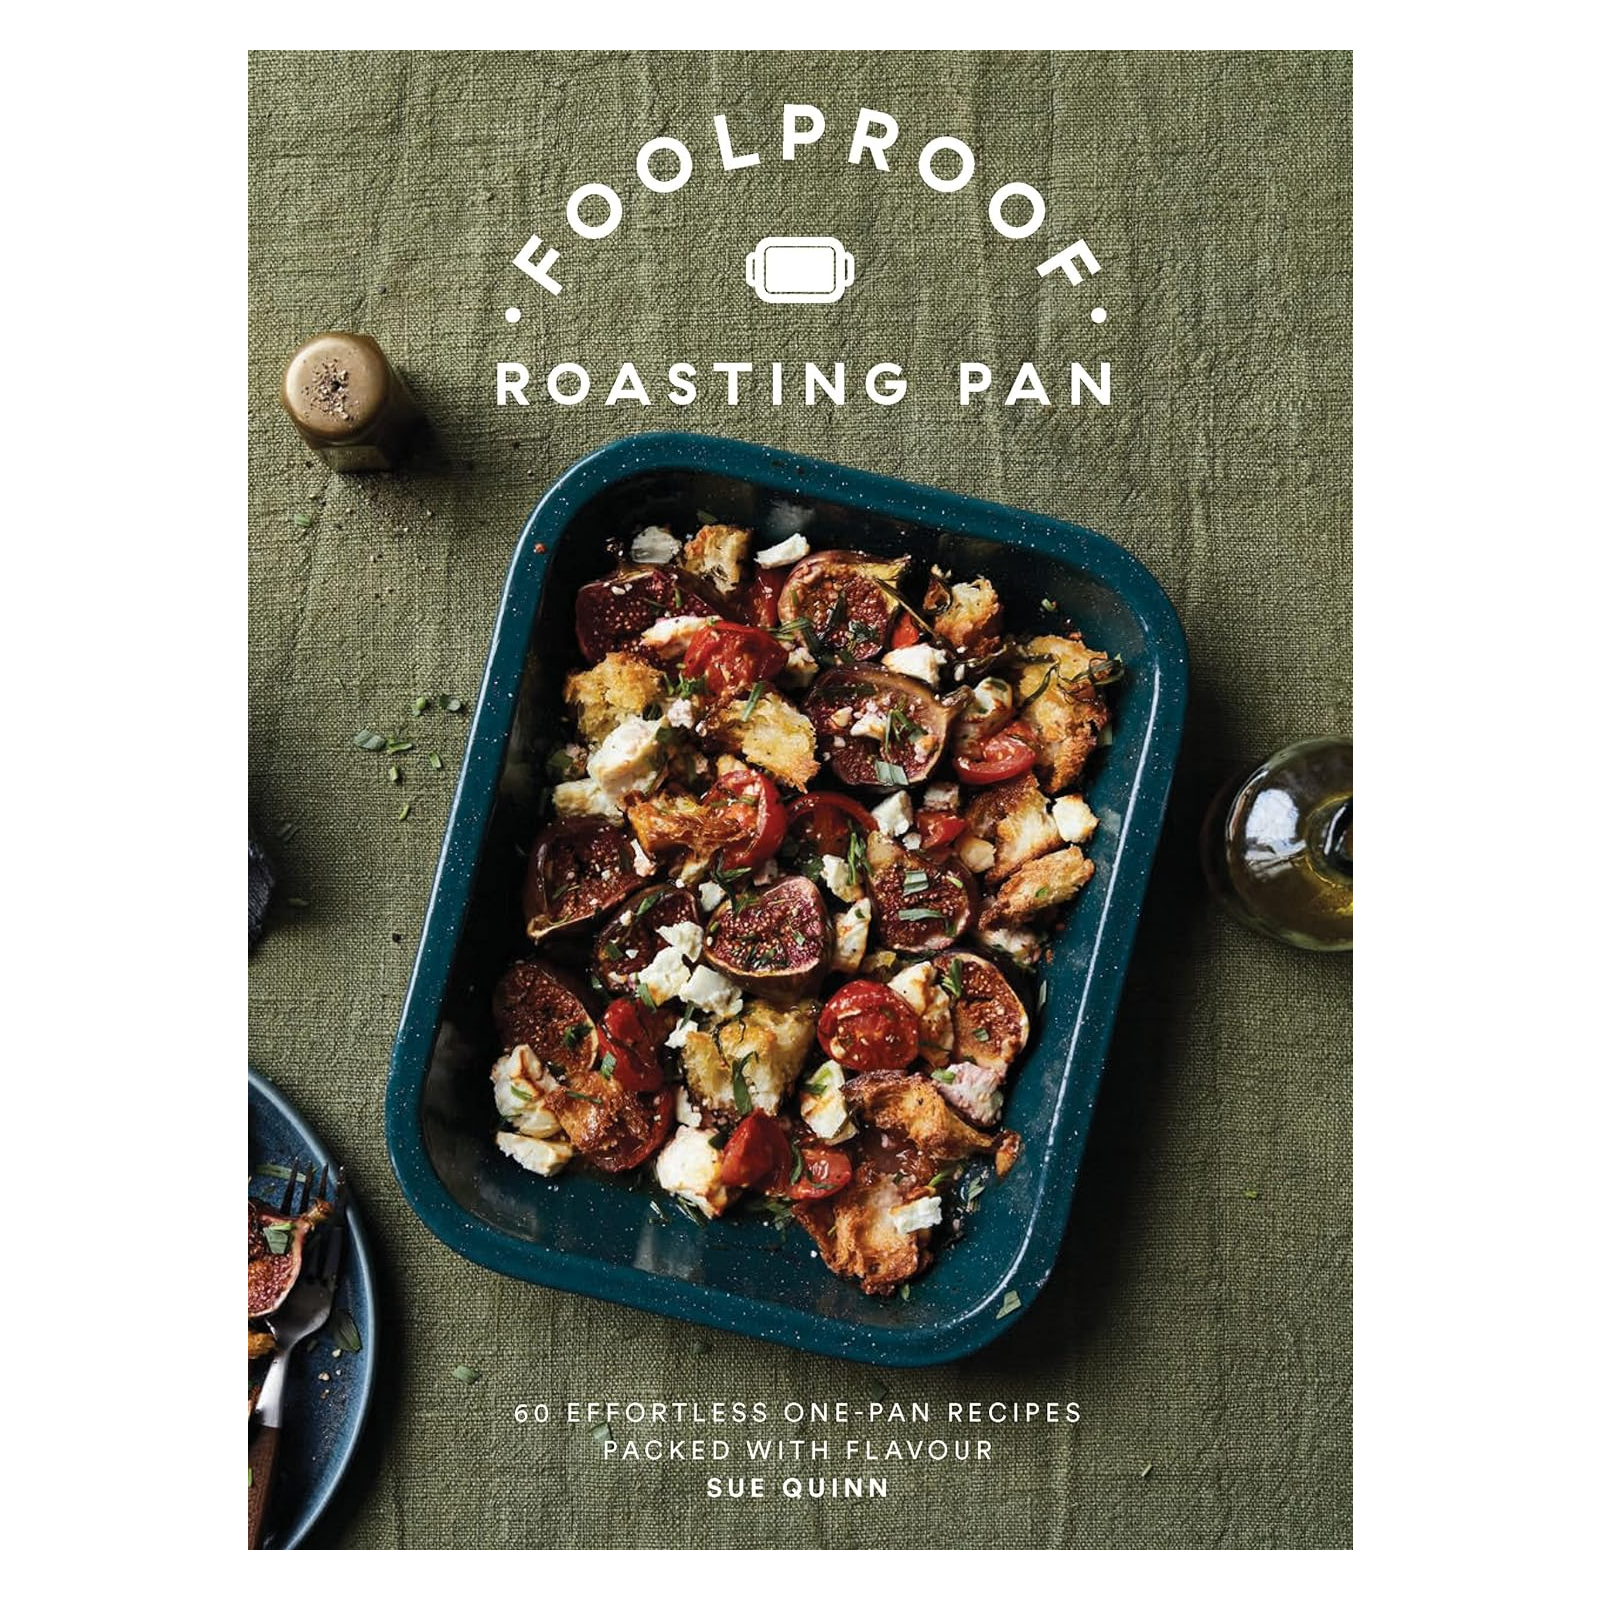 Foolproof Roasting Pan: 60 Effortless One-Pan Recipes Packed with Flavor